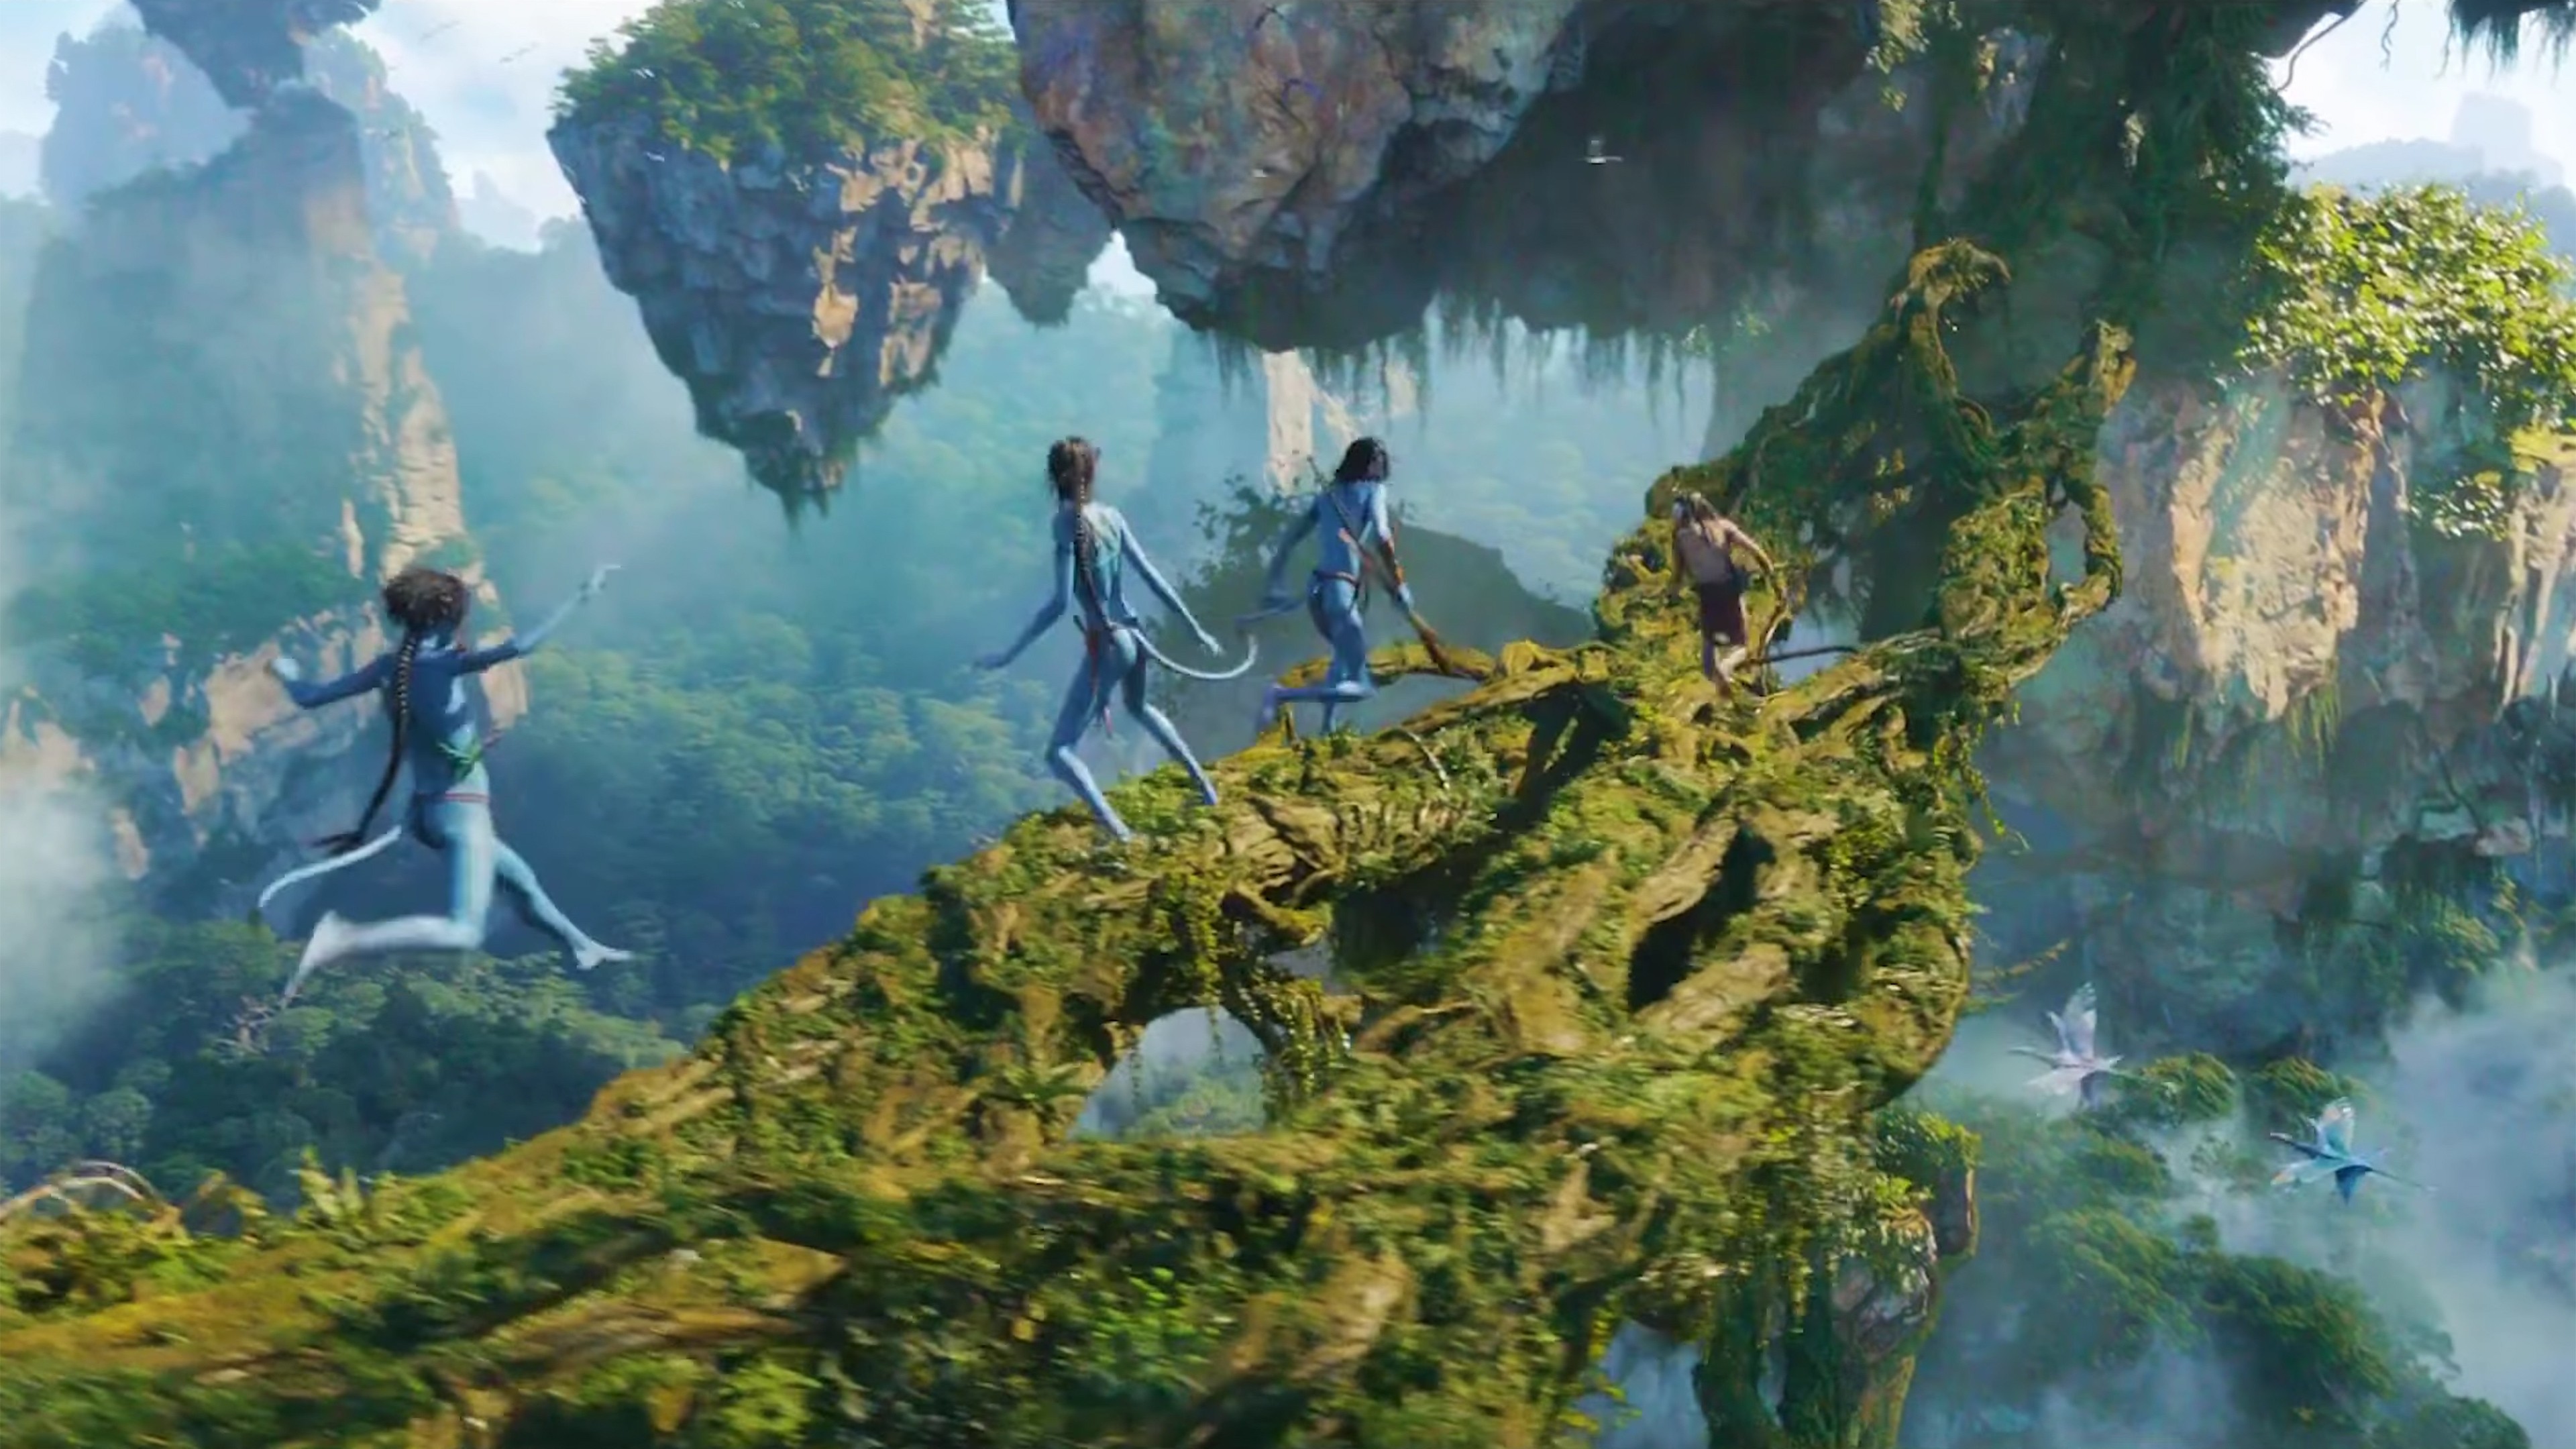 Avatar 2 Movie 4K Wallpapers